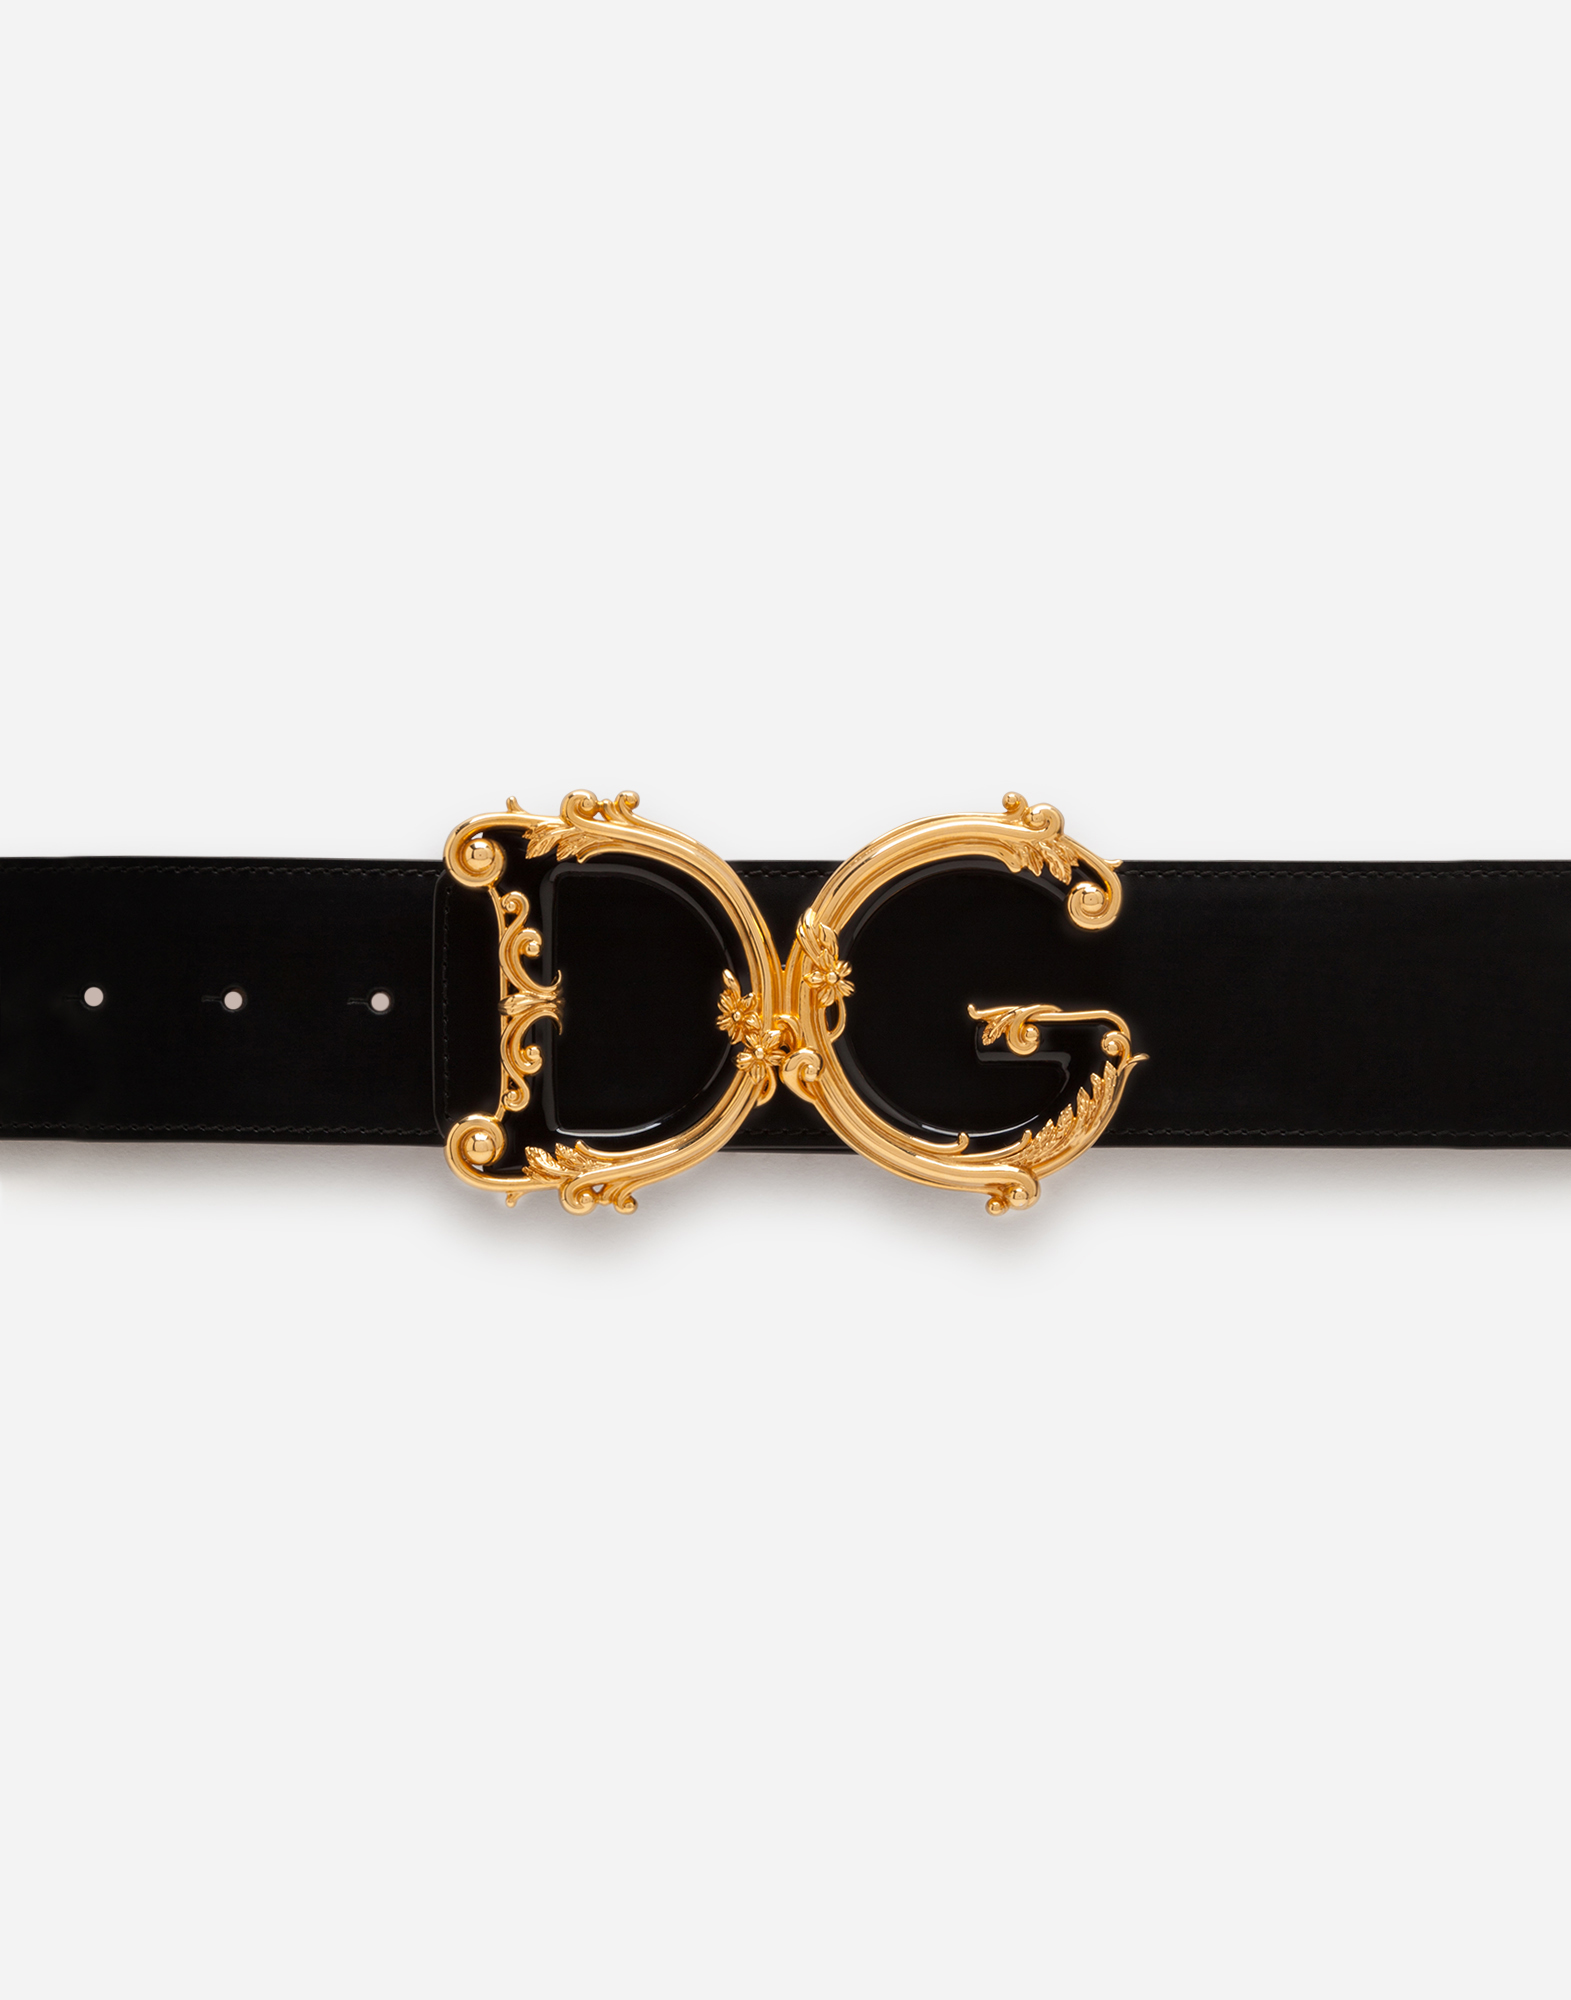 d&g belt price